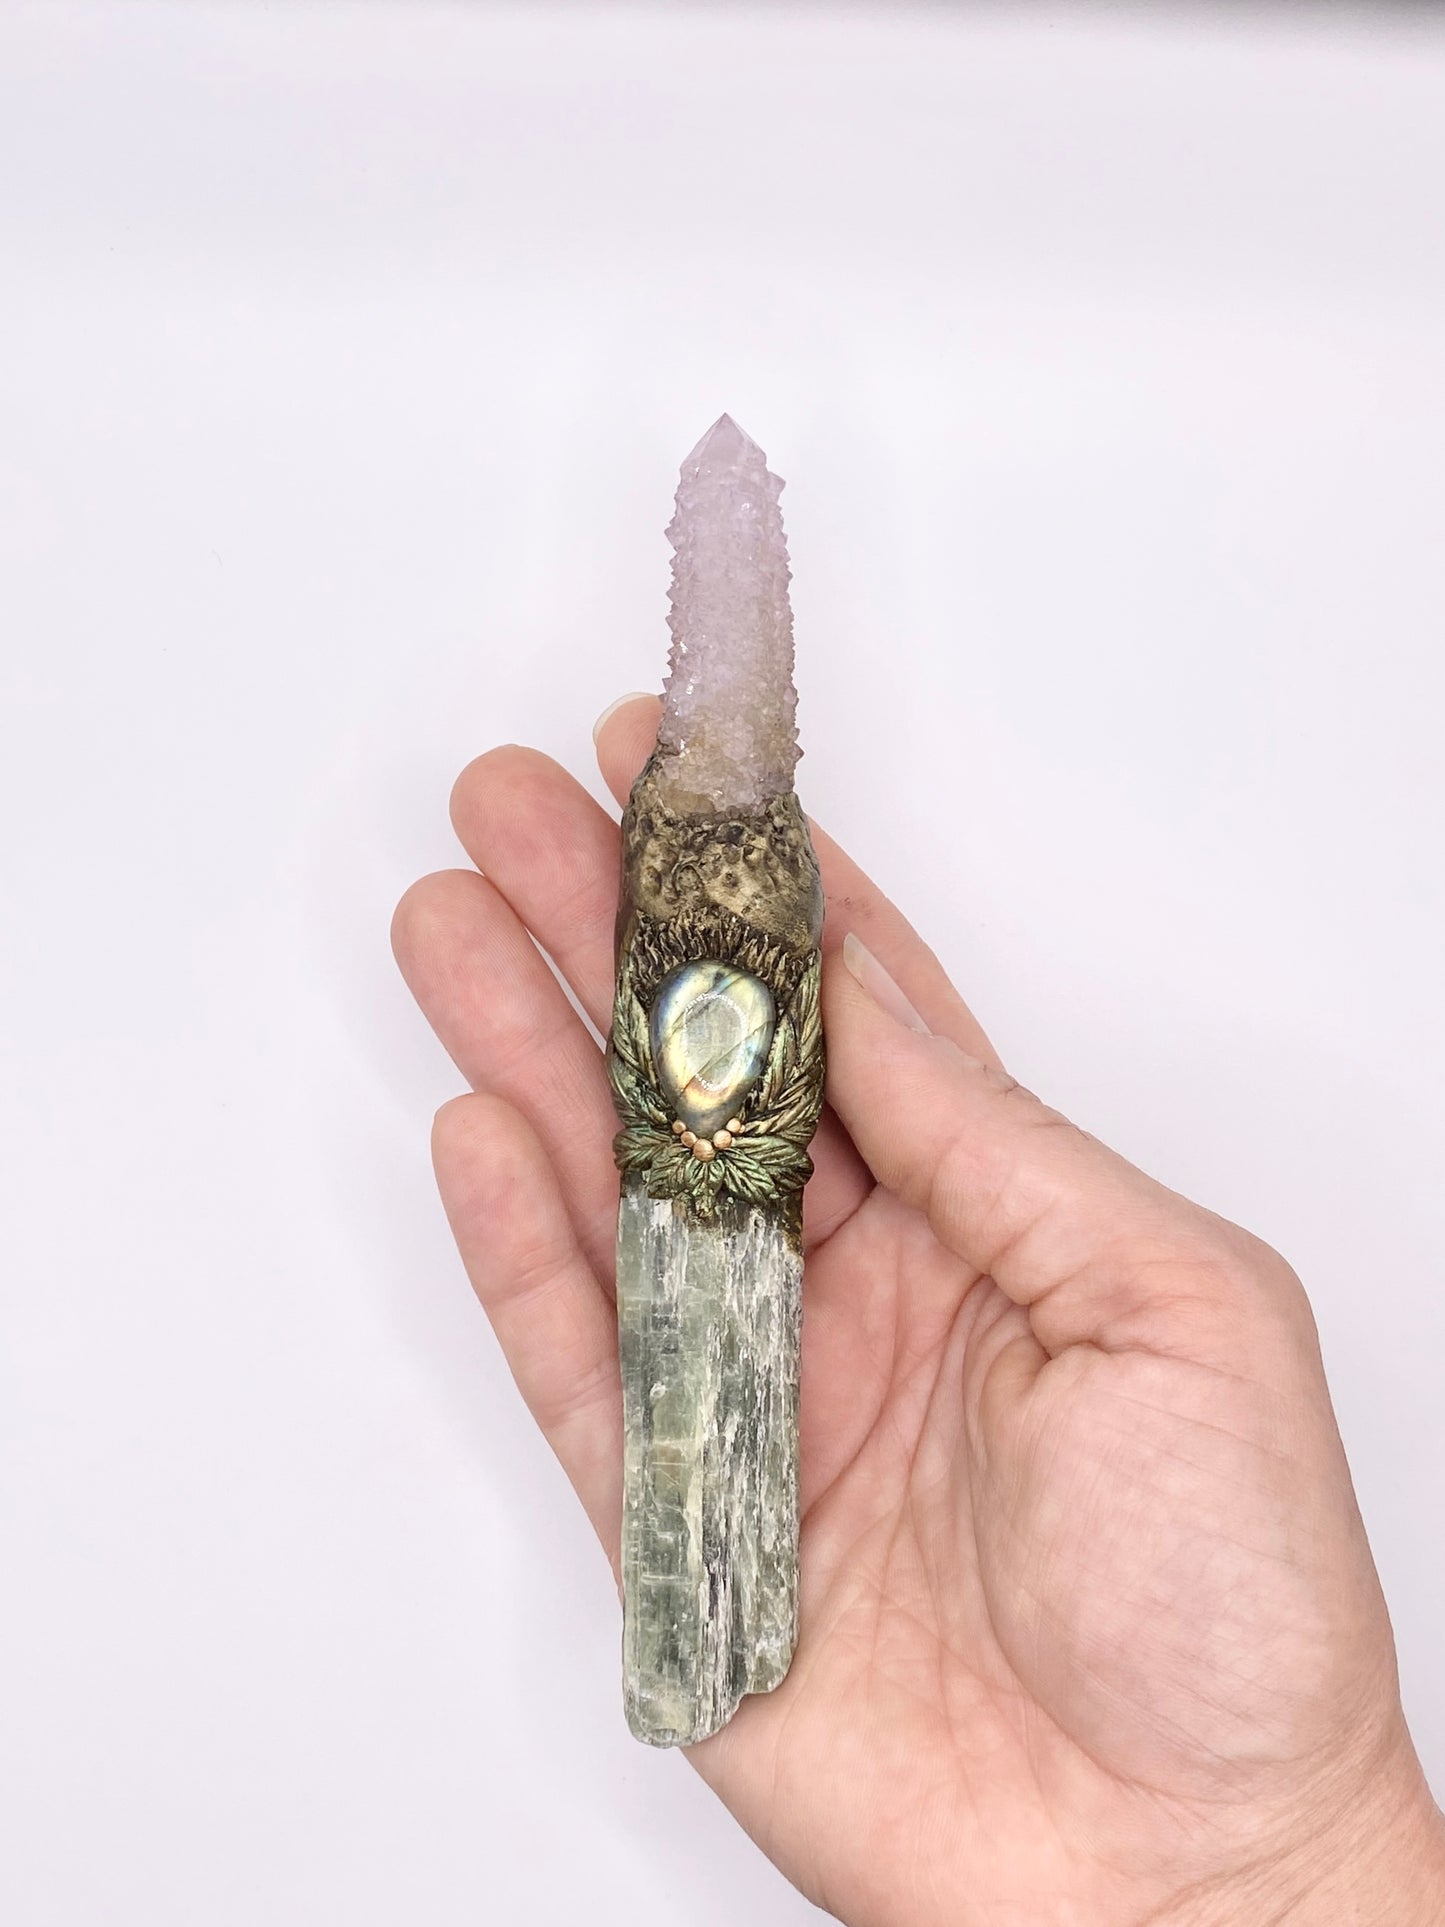 Crystal Energy Wand with Amethyst Spirit Quartz, Green Kyanite and Labradorite  - Reversible Metaphysical Wand